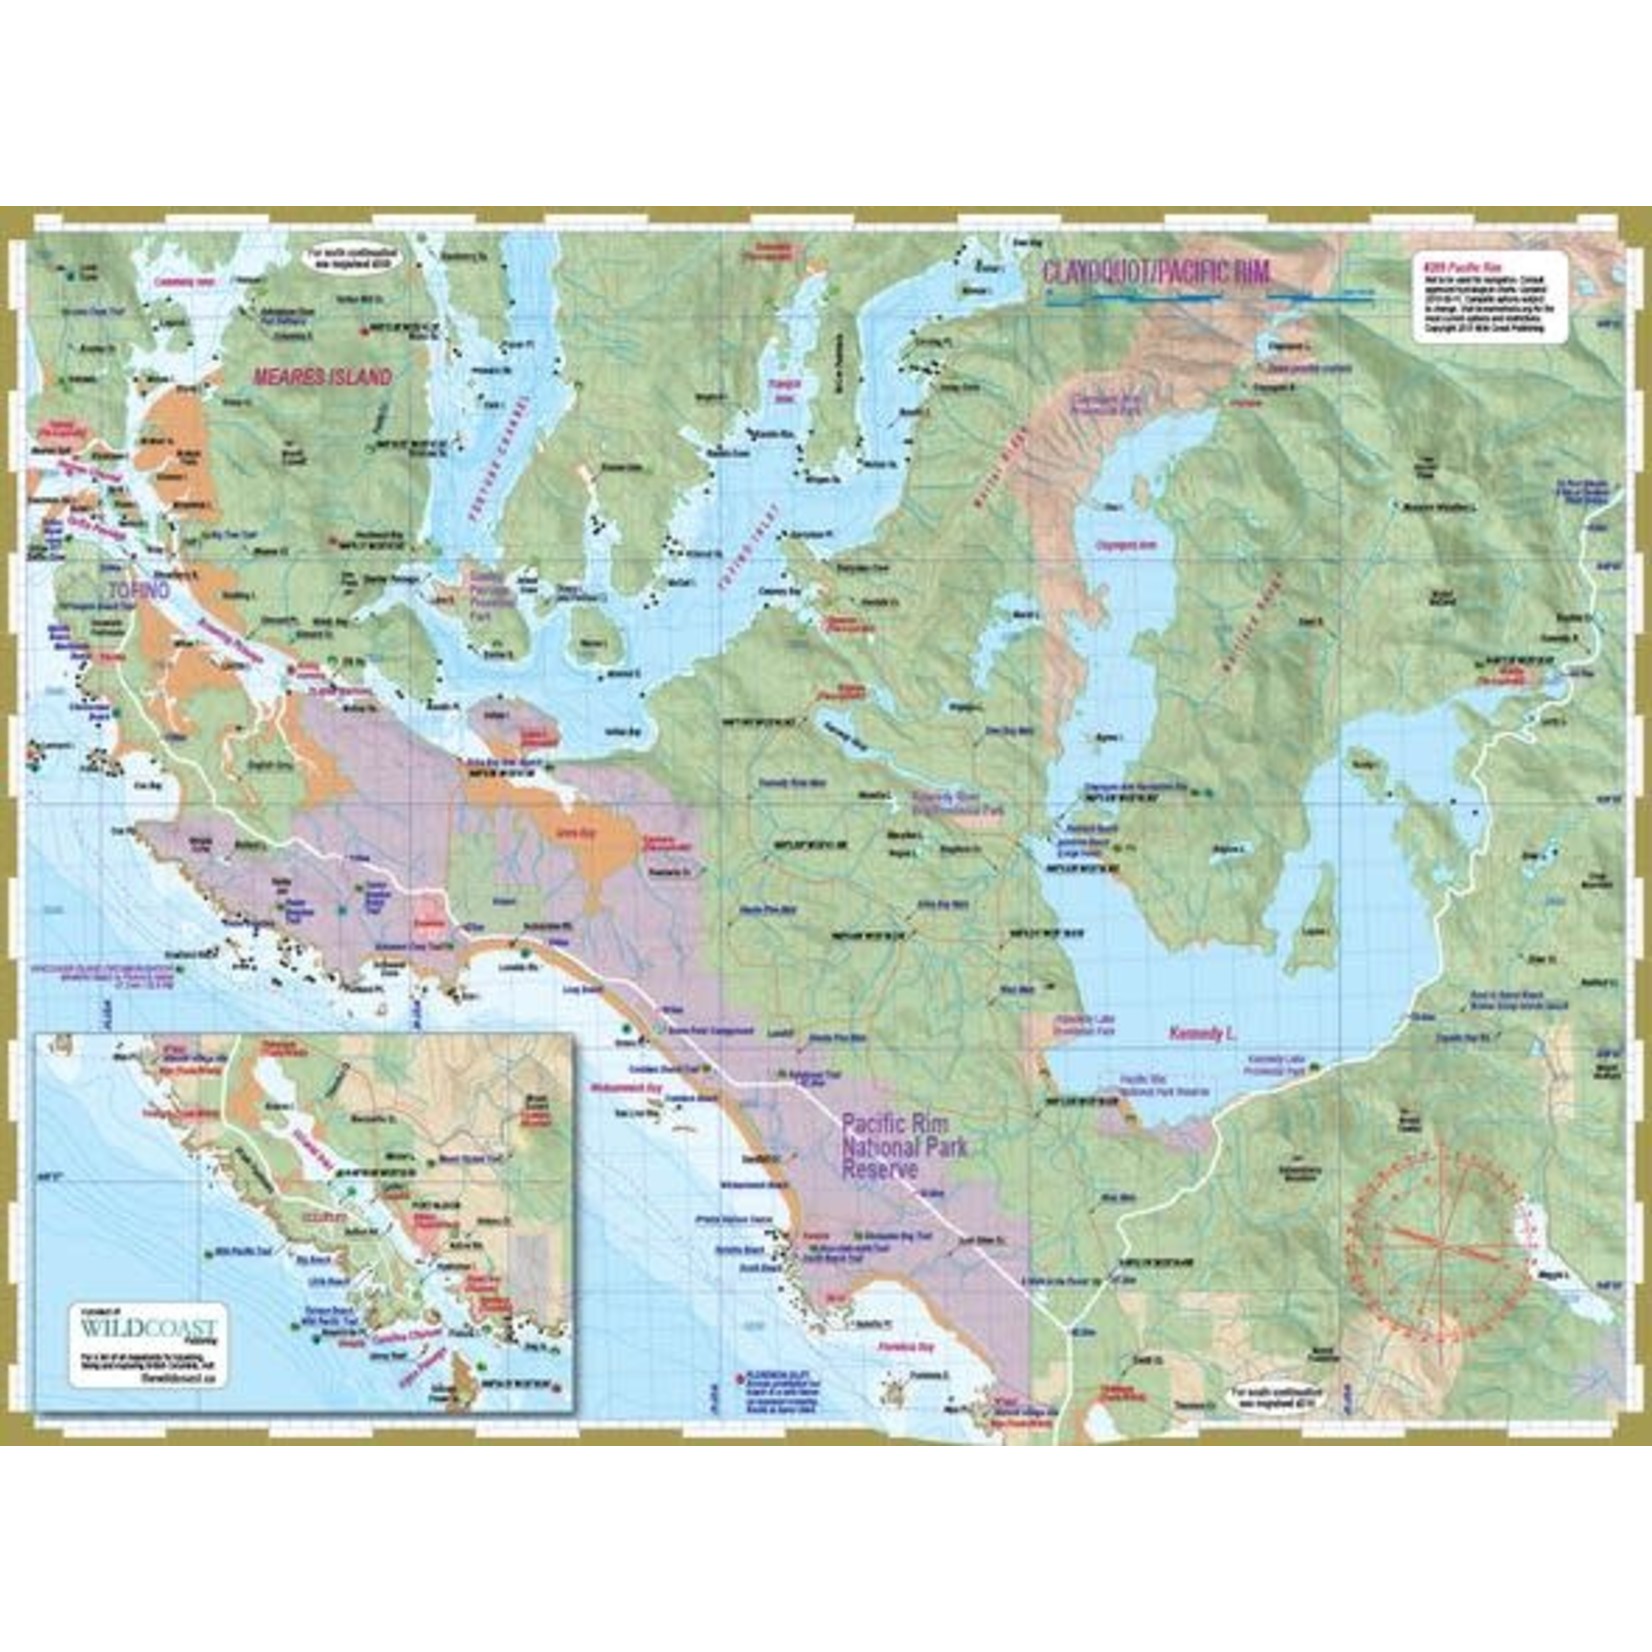 Wild Coast Publishing Map Clayoquot/Pacific Rim 209W